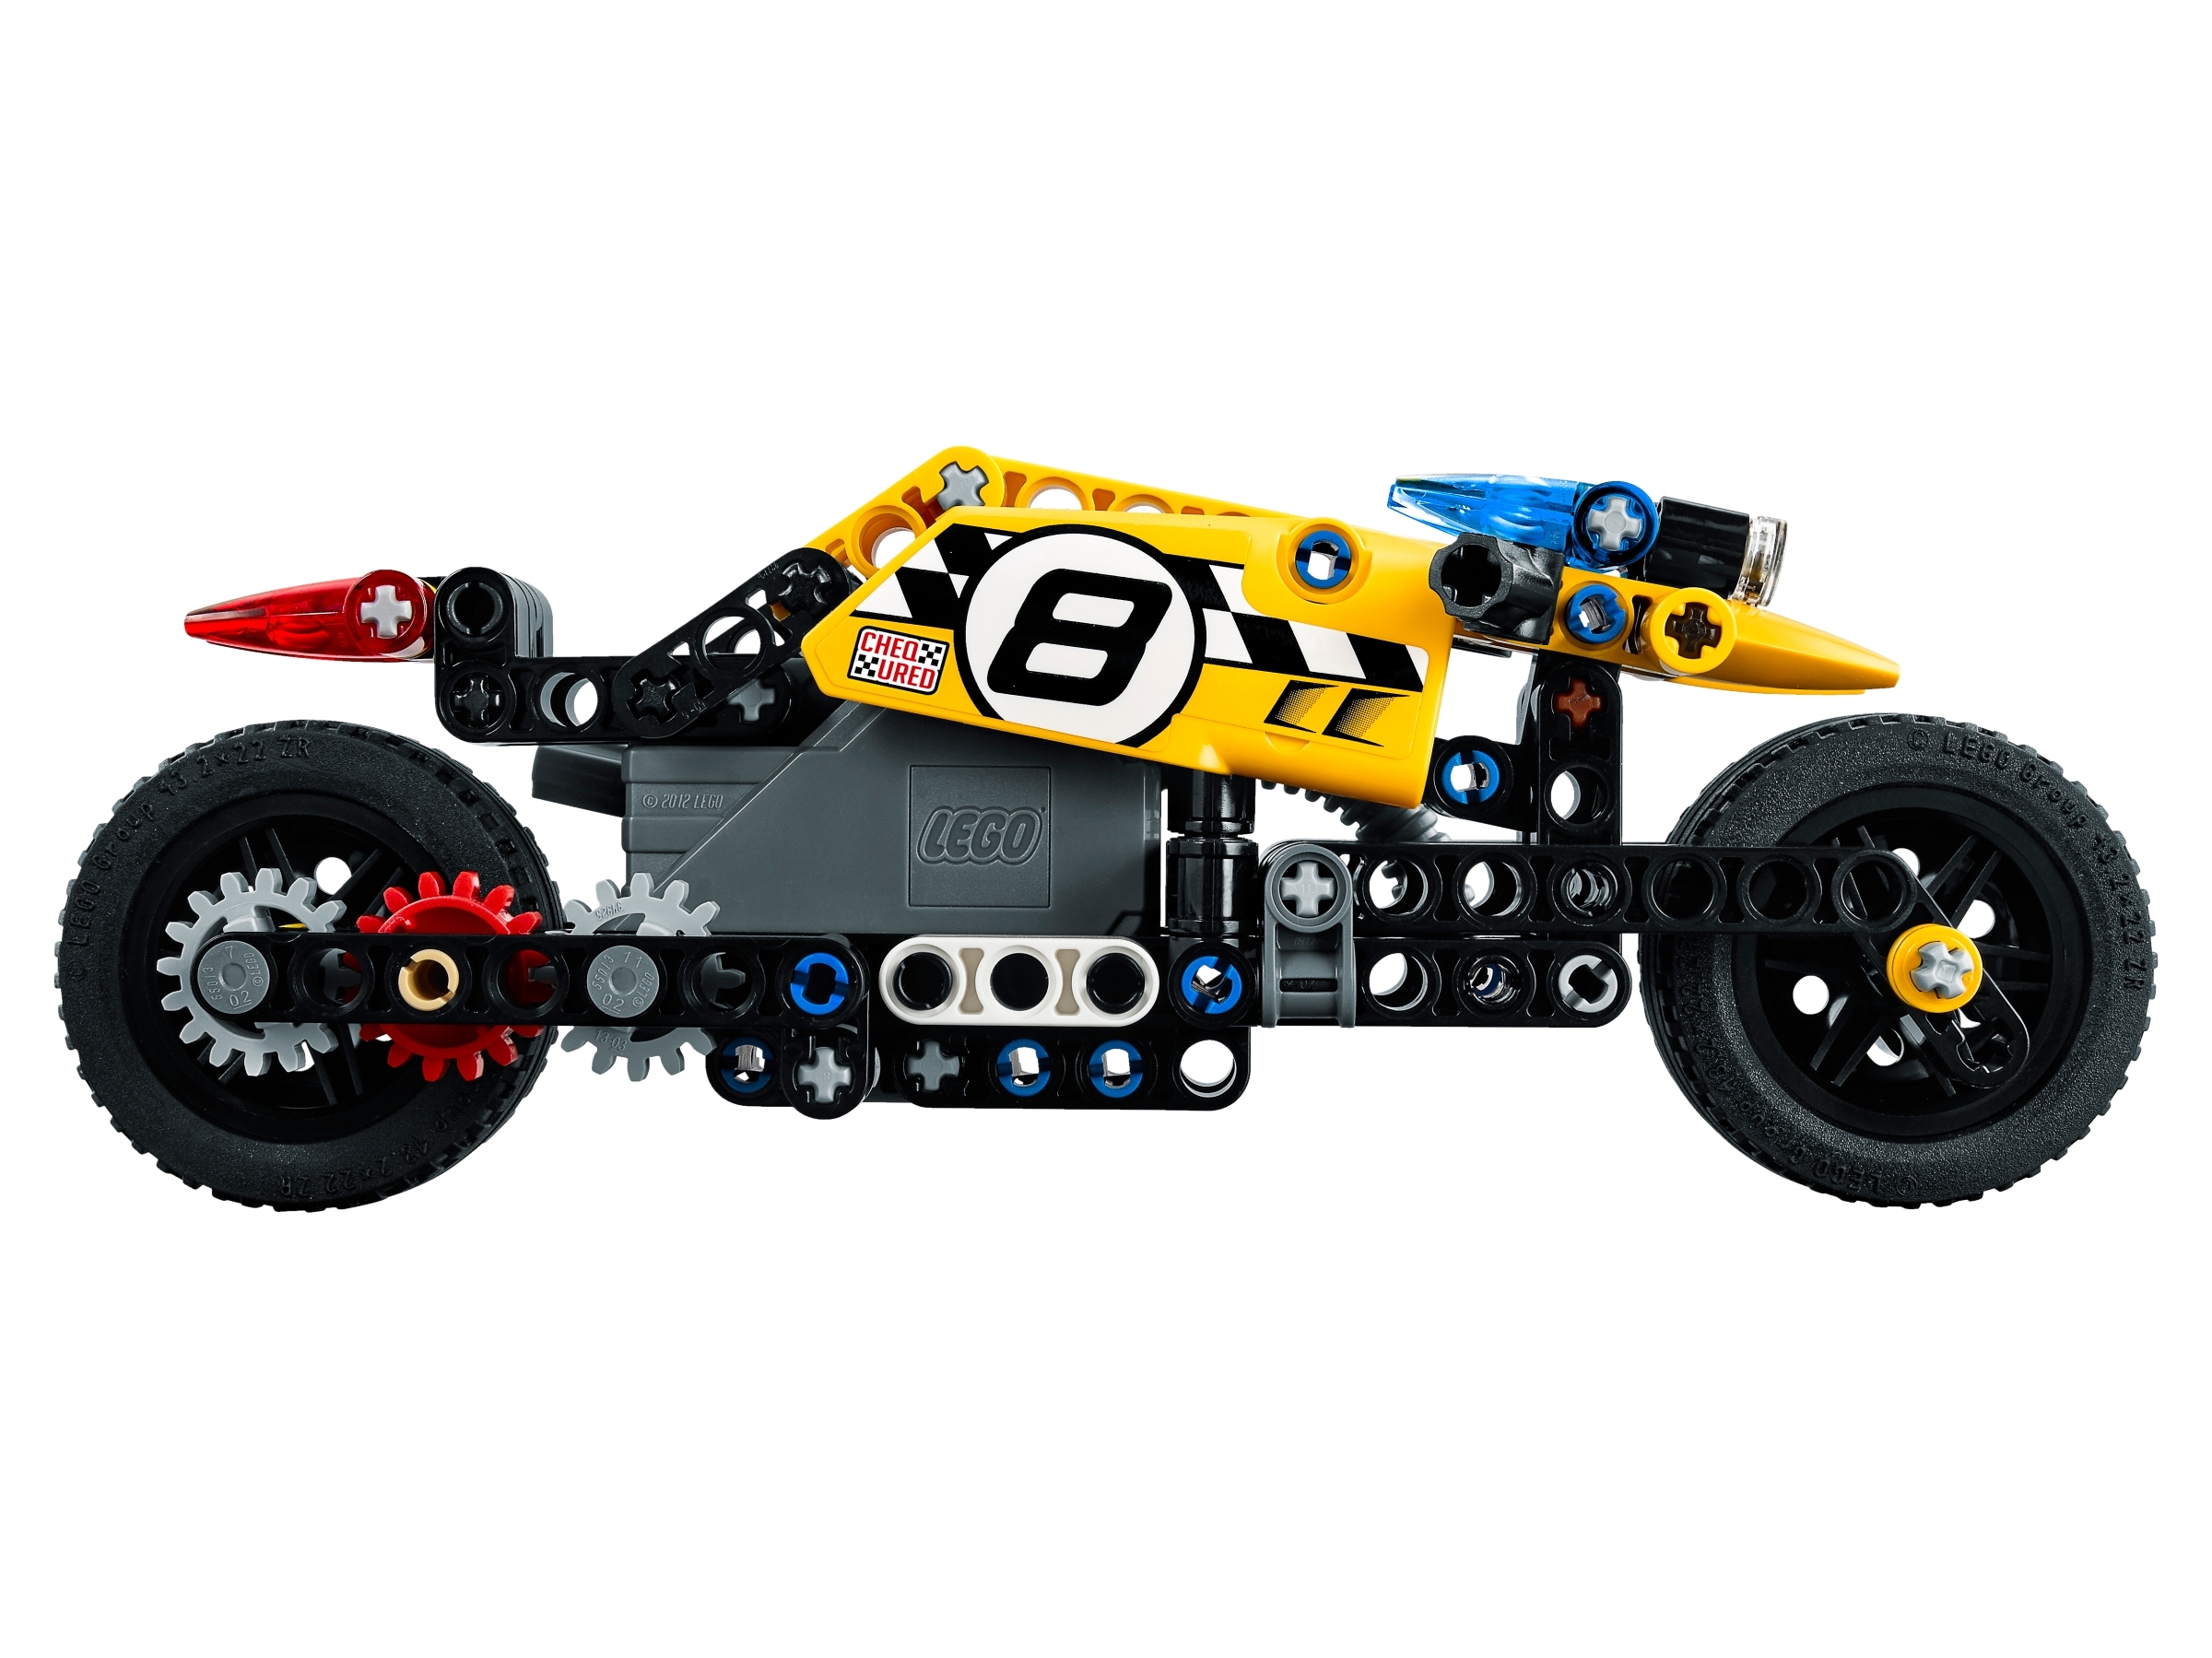 LEGO Technic Stunt Bike 42058 Advanced Vehicle Set 